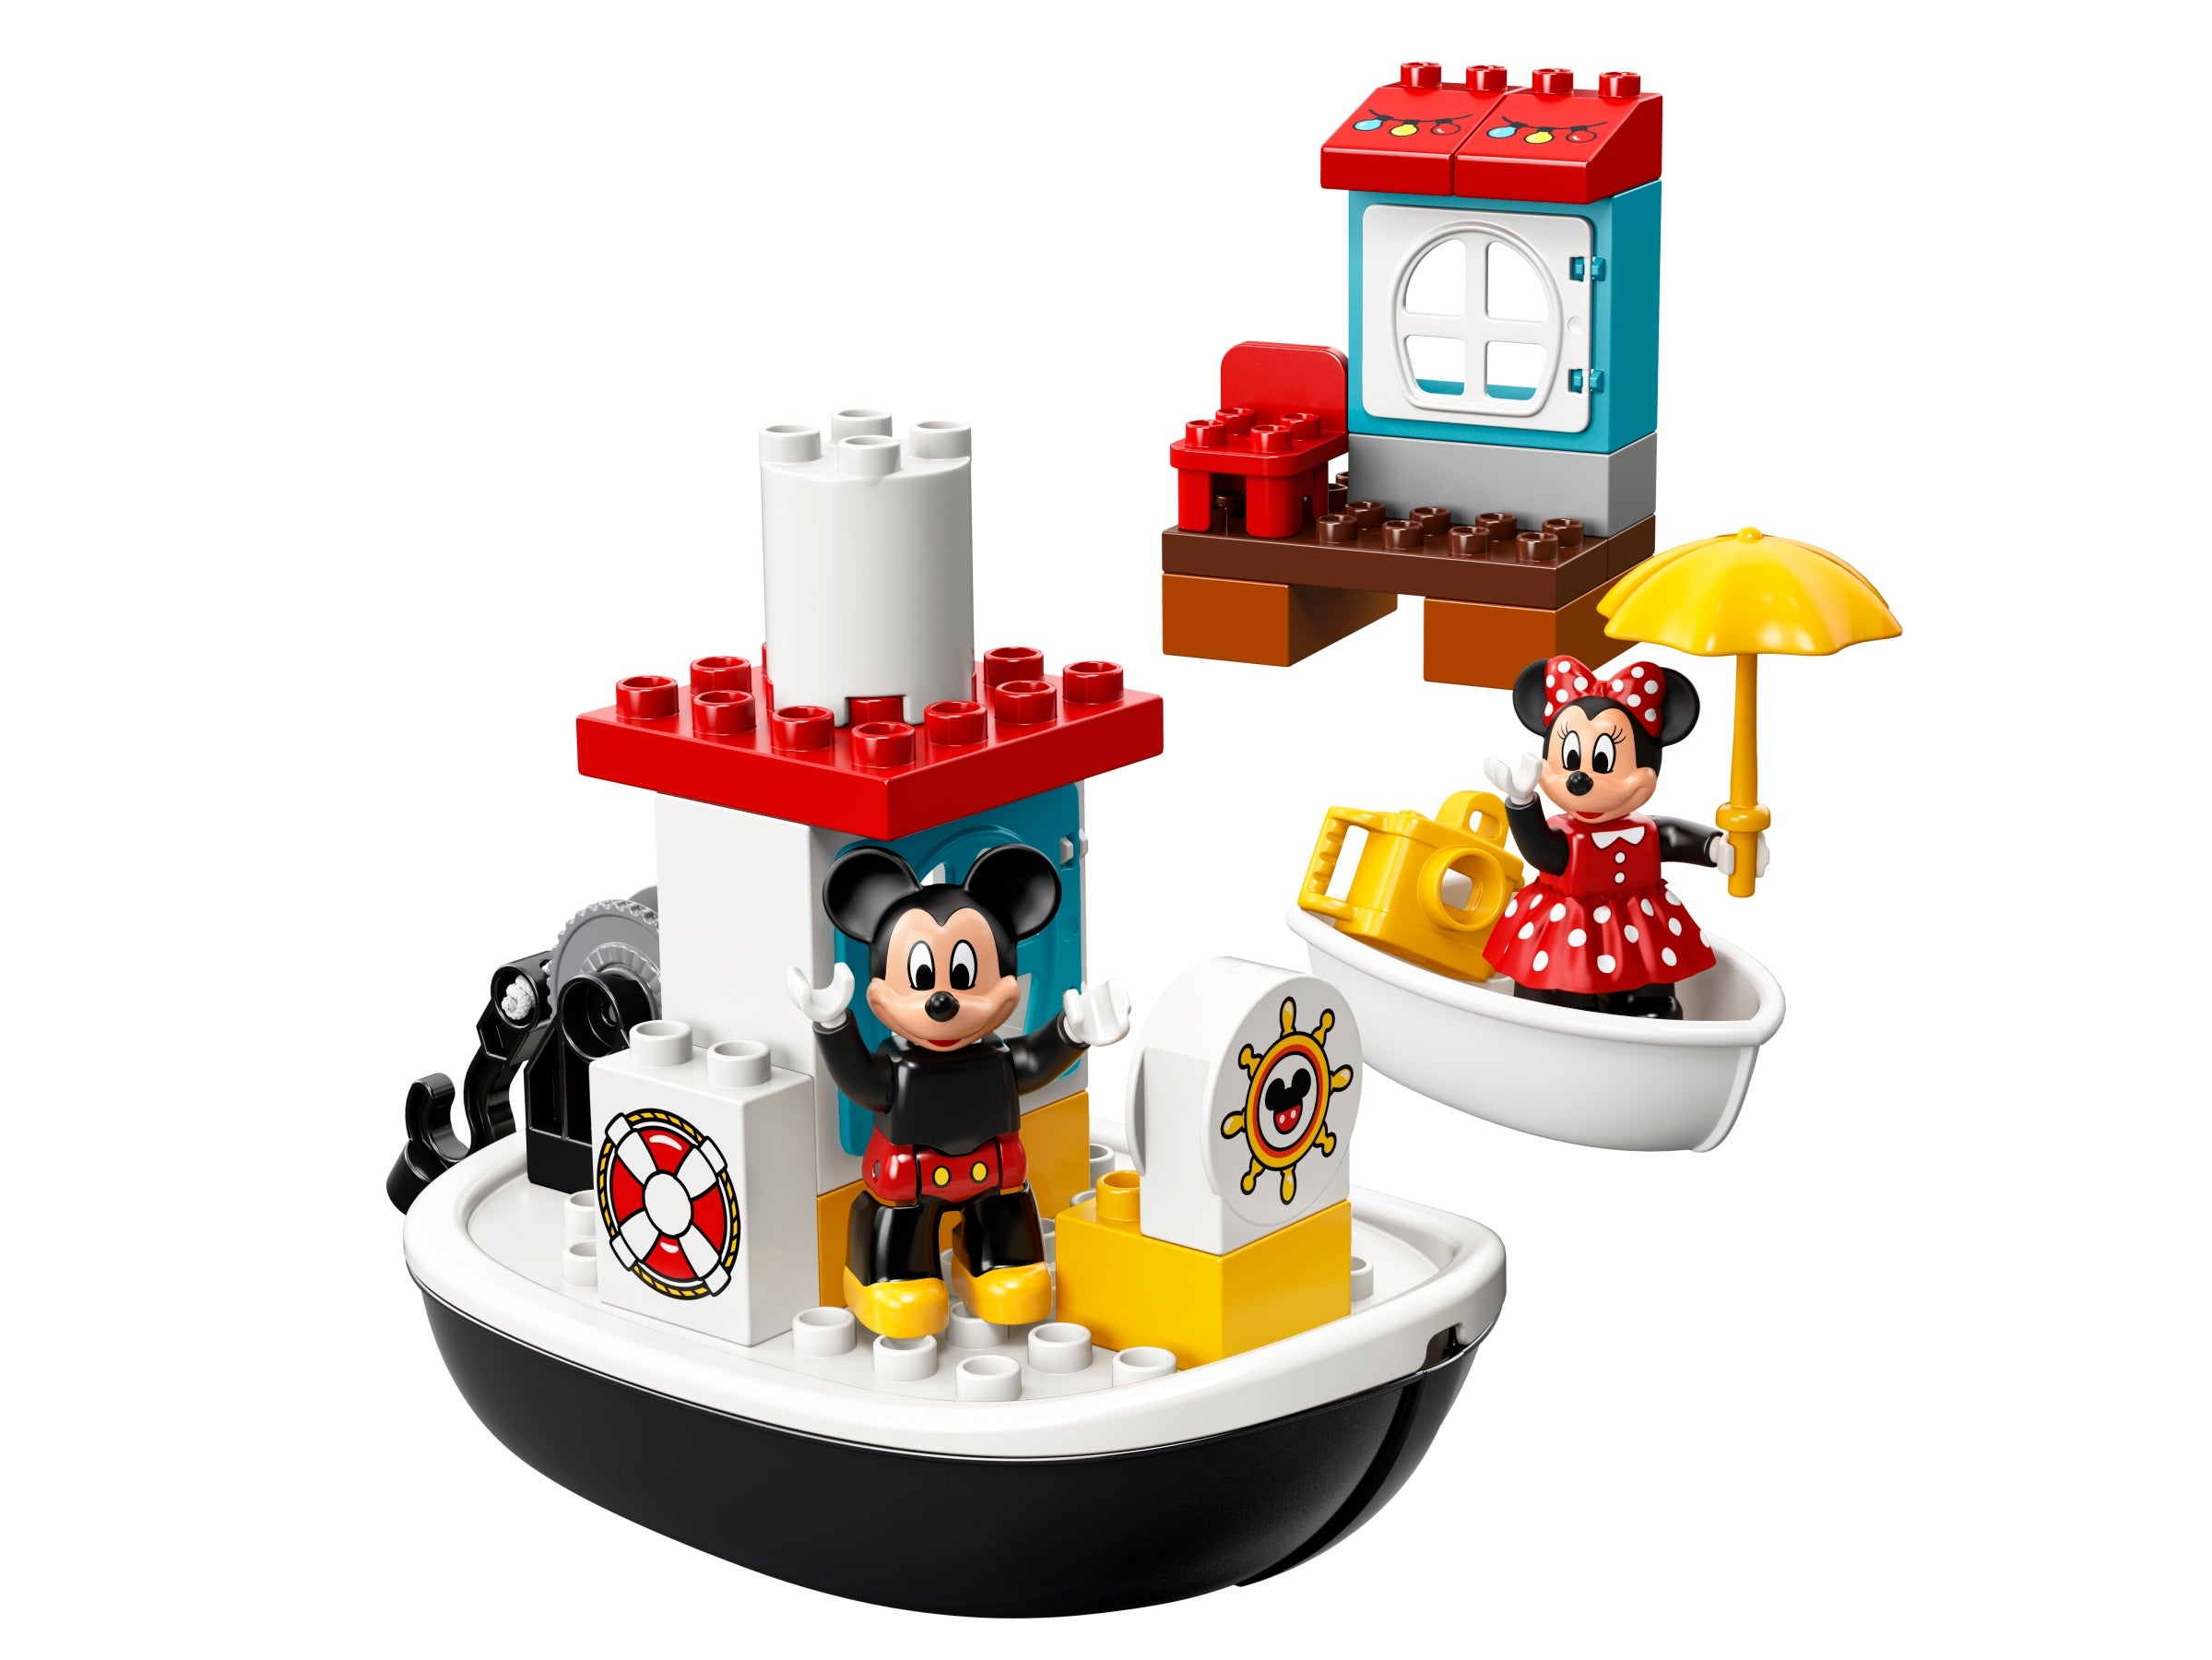 LEGO Duplo 10881 Mickey's Boat Disney Roadster Racers for sale online